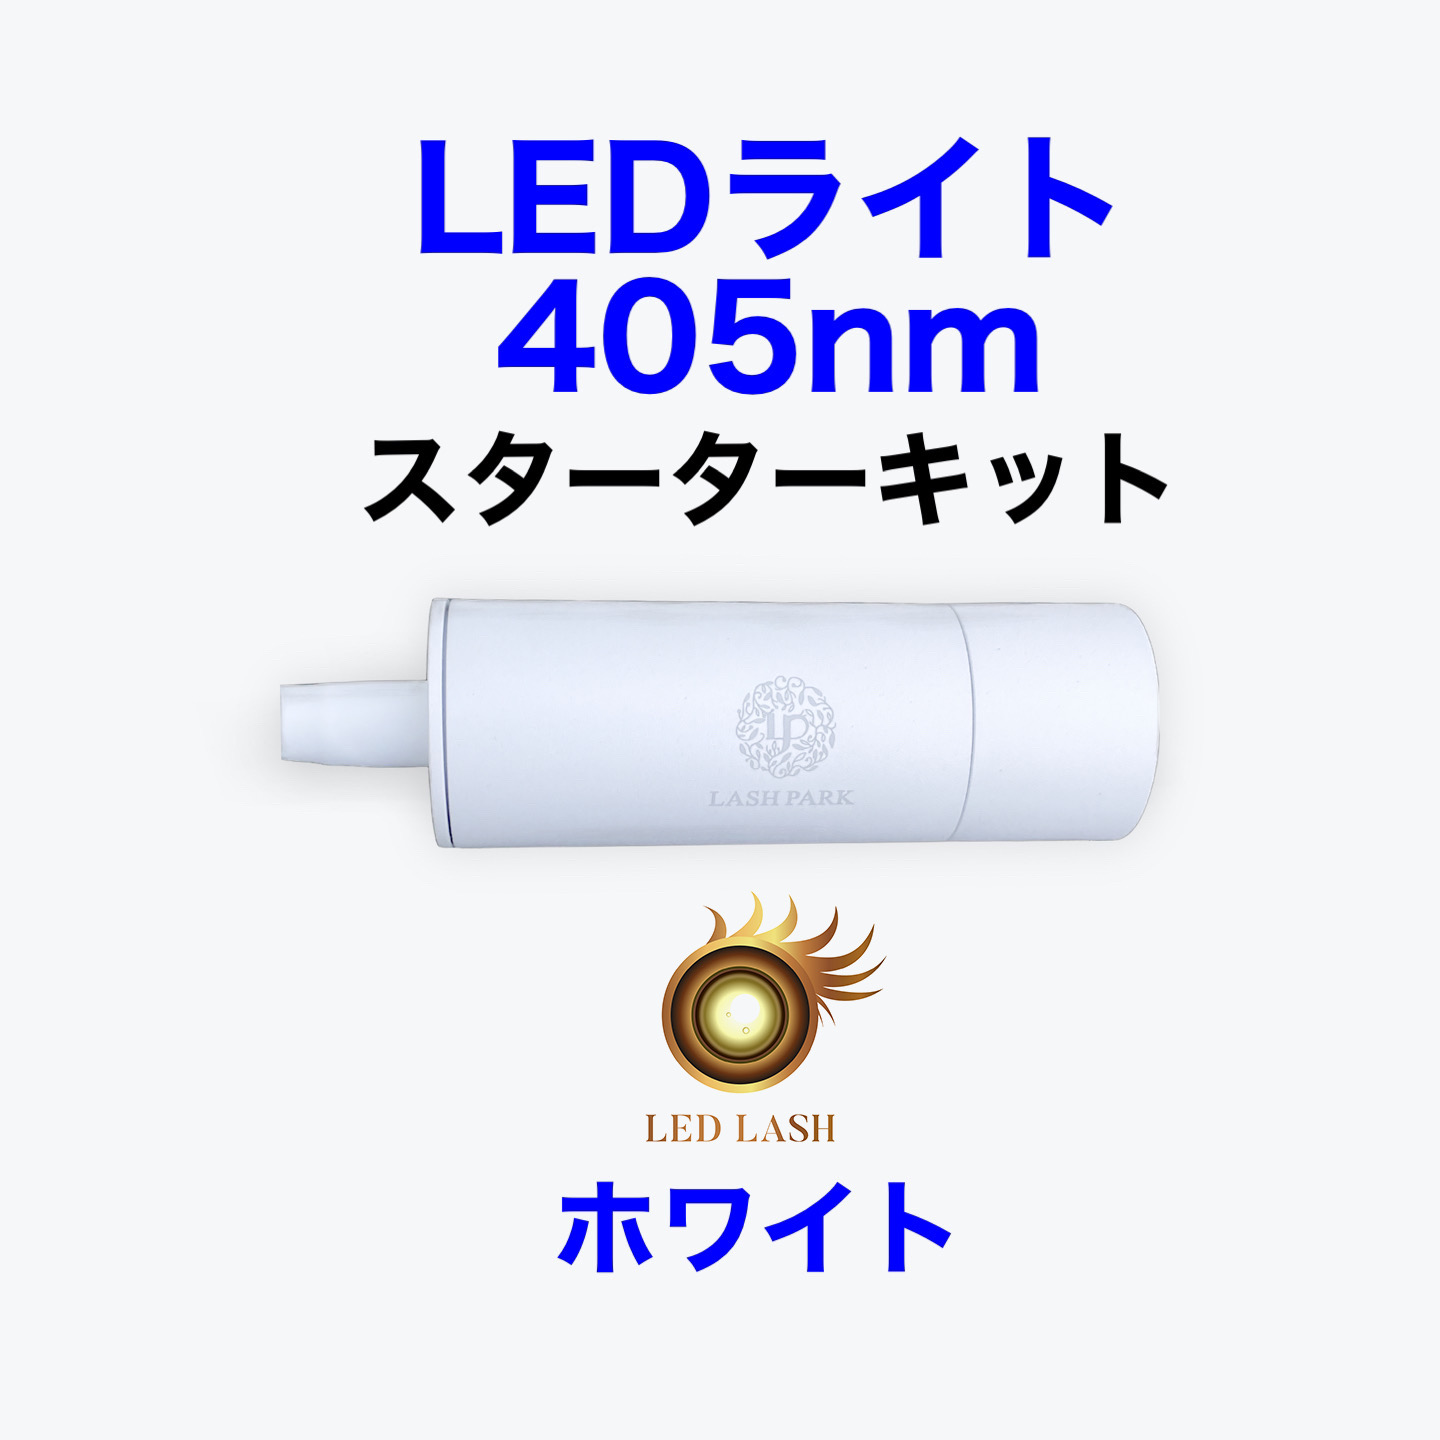 LEDスターターキット　405nm ホワイト 施術マニュアル付き LED LASH画像